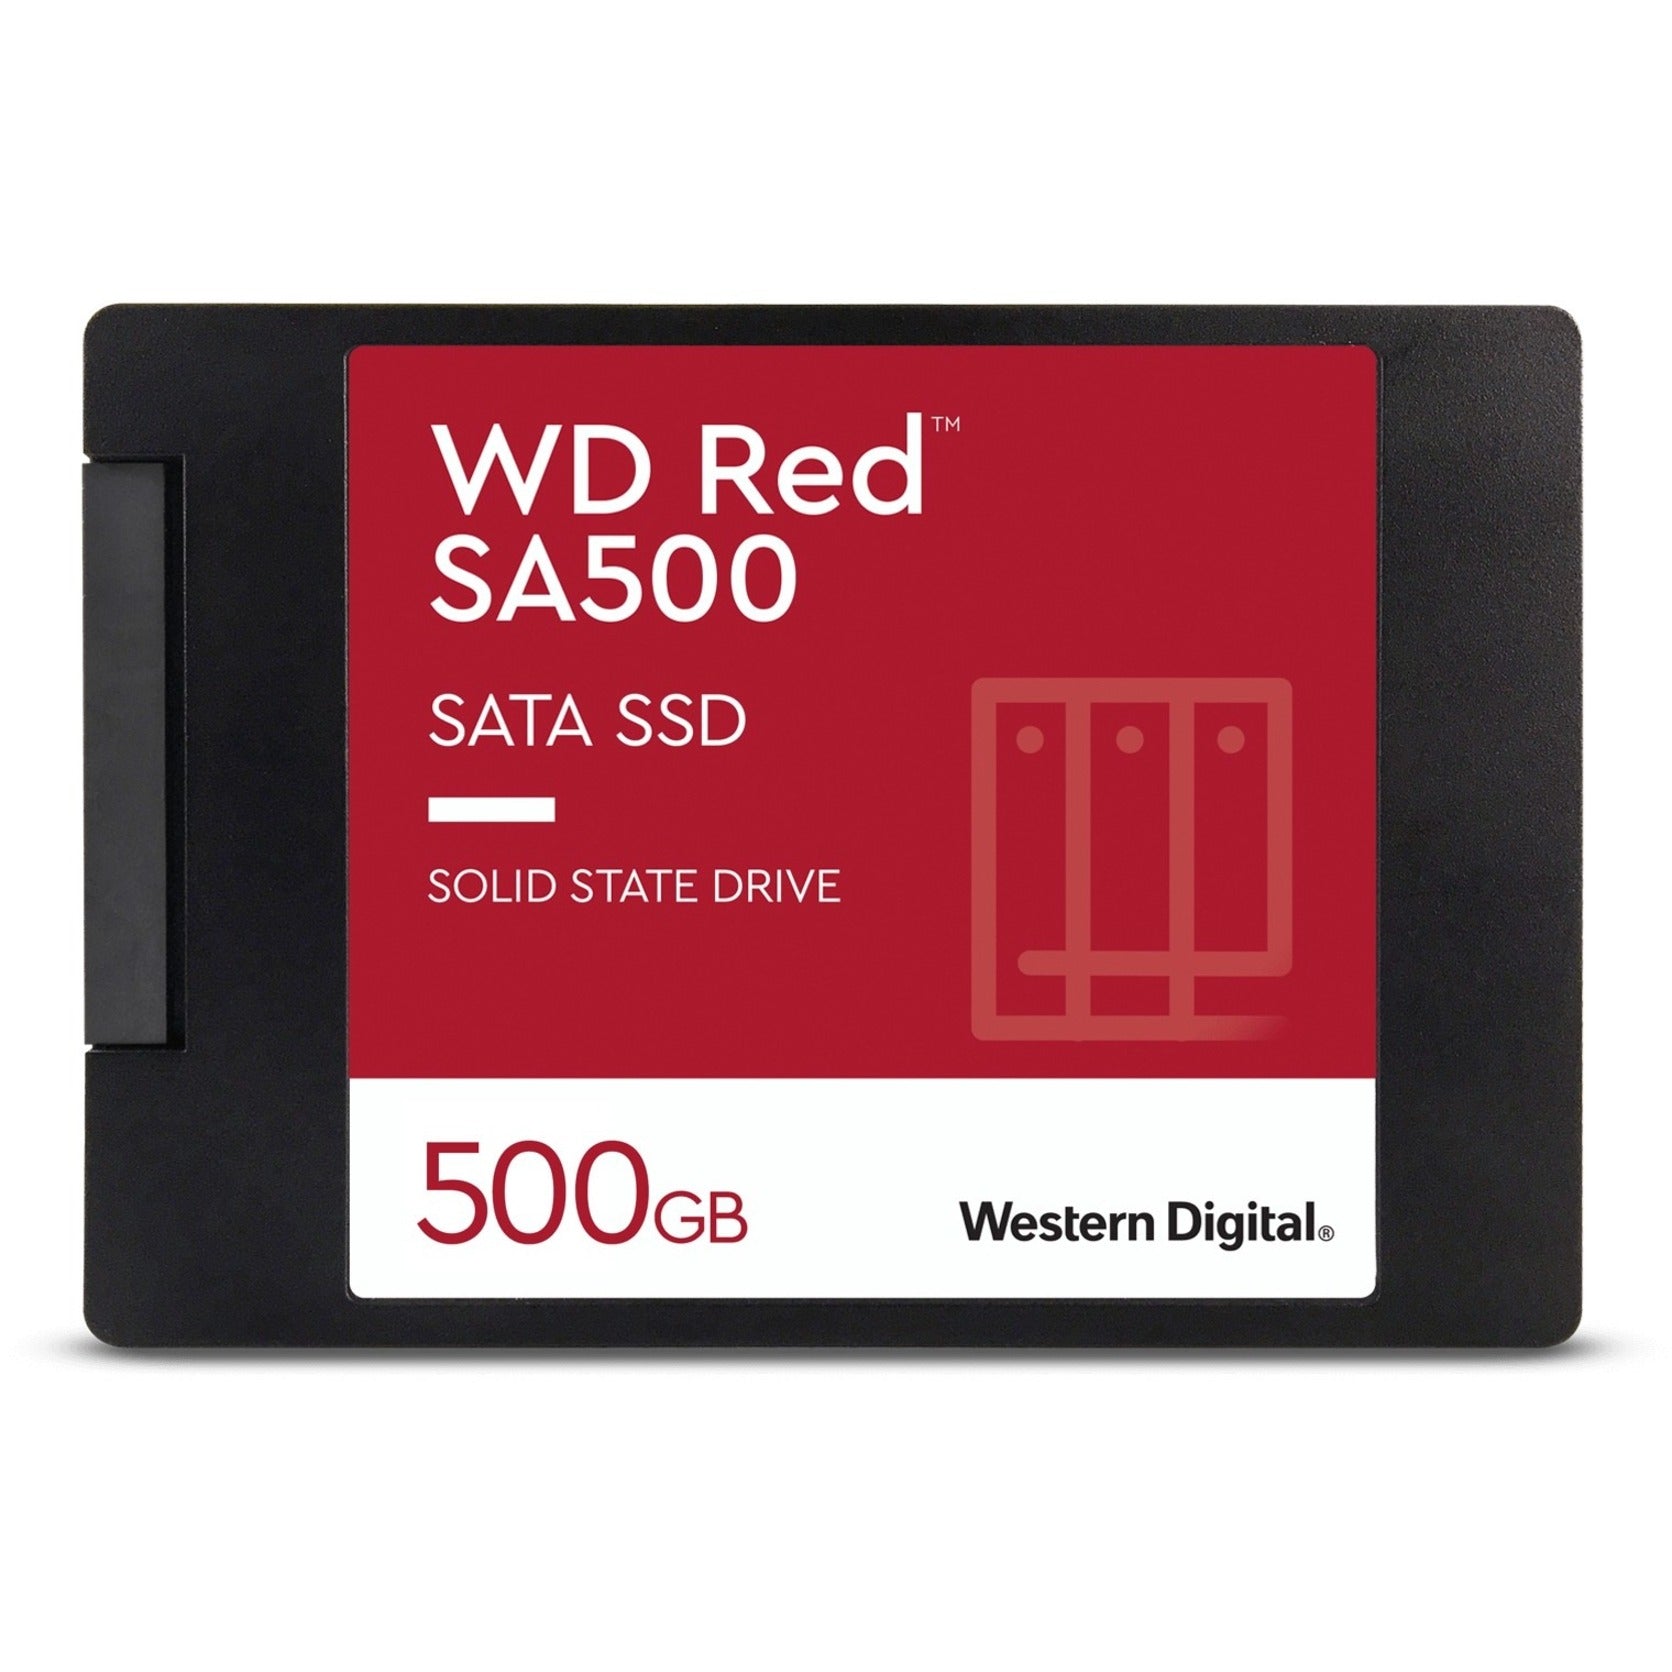 Western Digital WDS500G1R0A Red SA500 NAS SATA SSD, 500GB, 5-Year Warranty, RoHS Certified